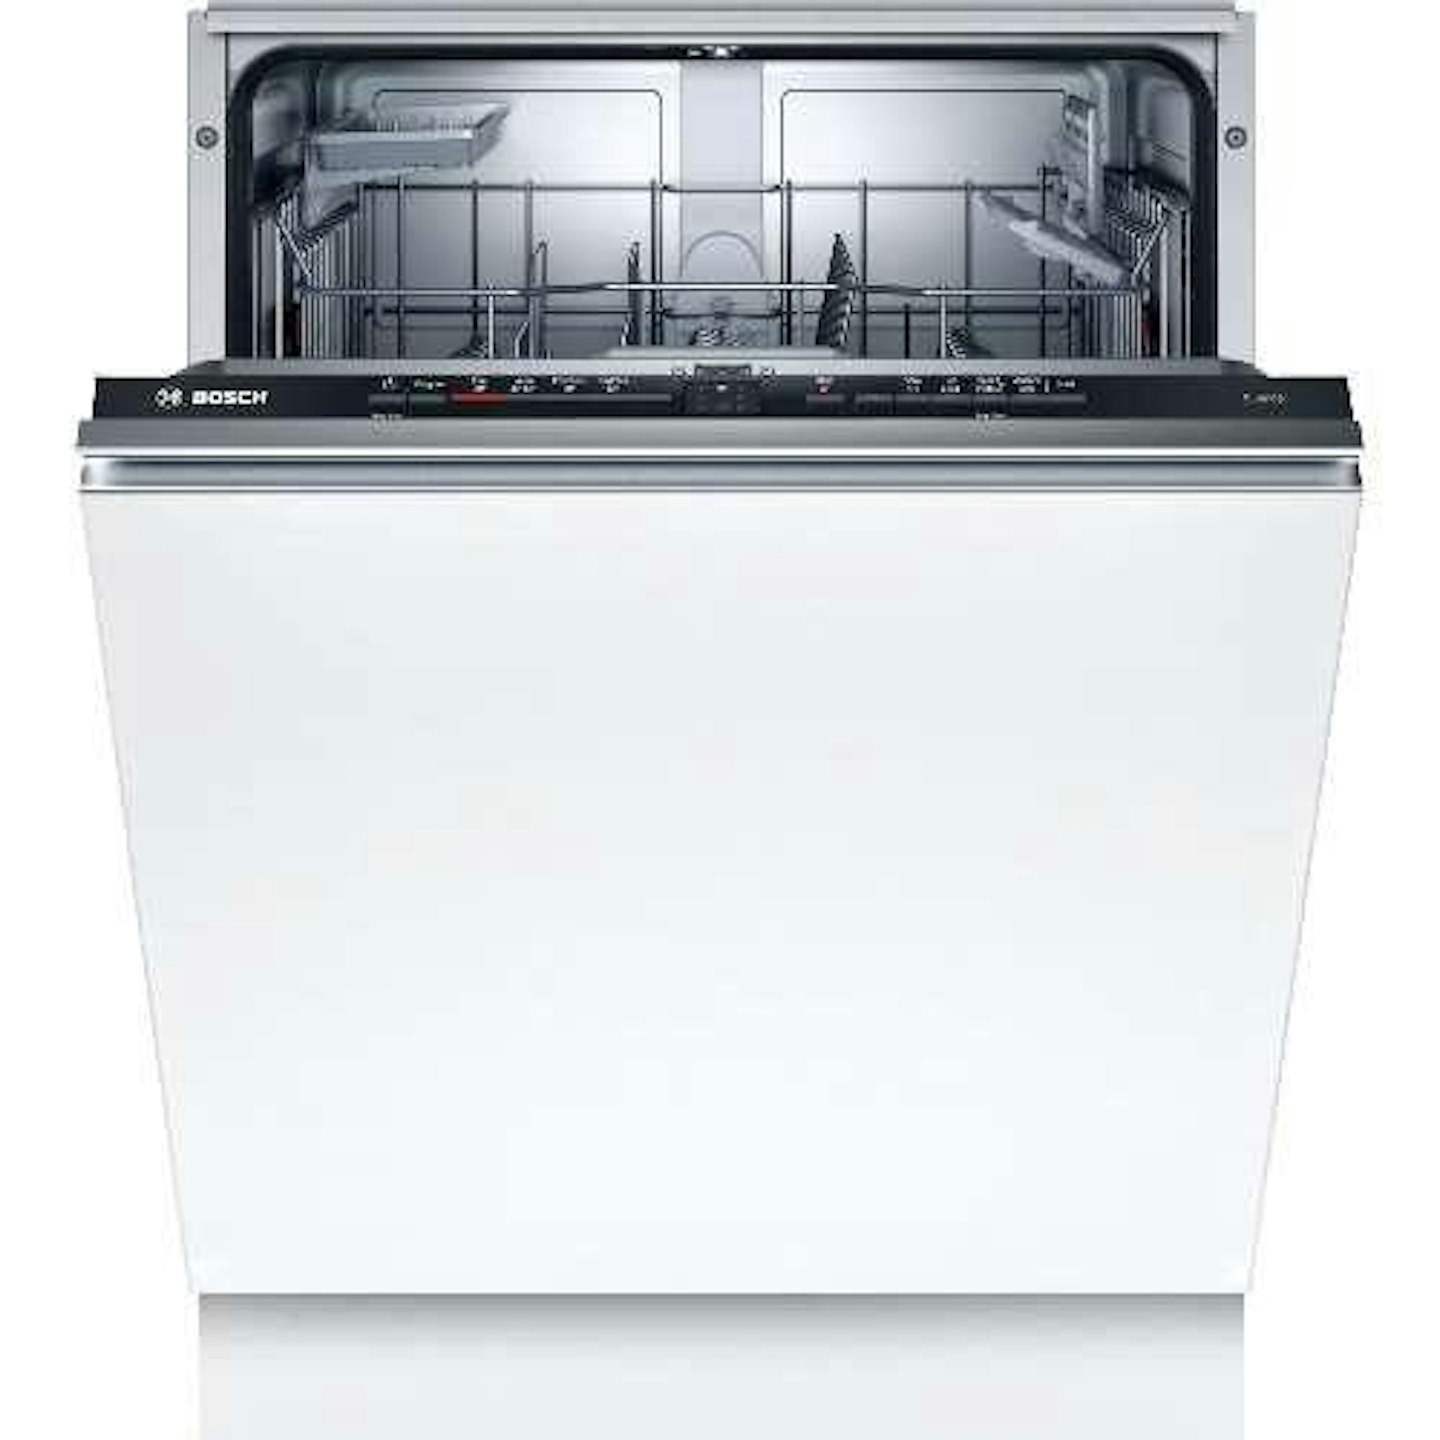 Bosch Serie 2 SMV2ITX18G Built-In Dishwasher, White